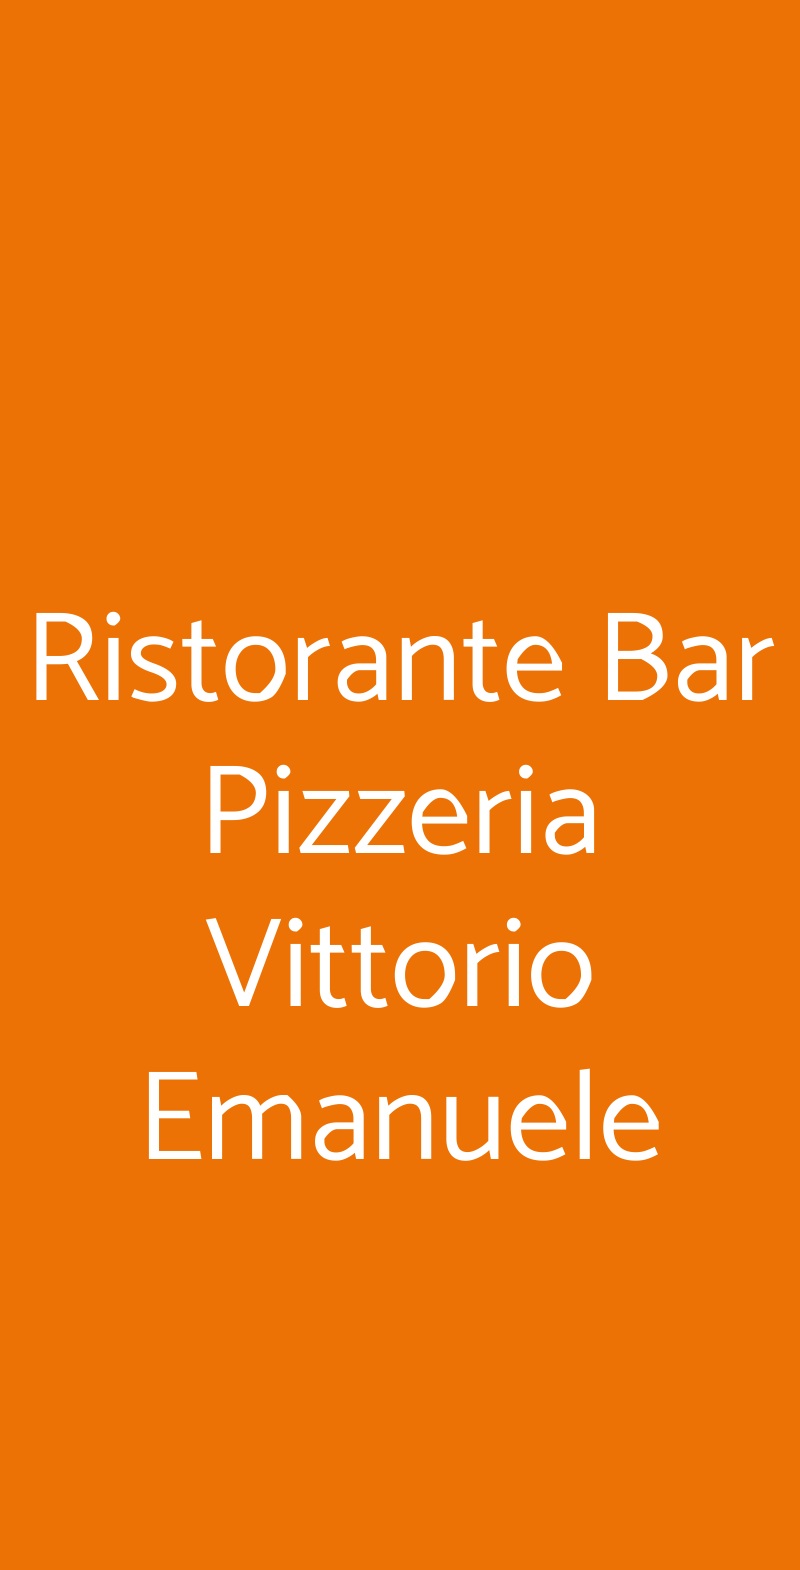 Ristorante Bar Pizzeria Vittorio Emanuele Anagni menù 1 pagina